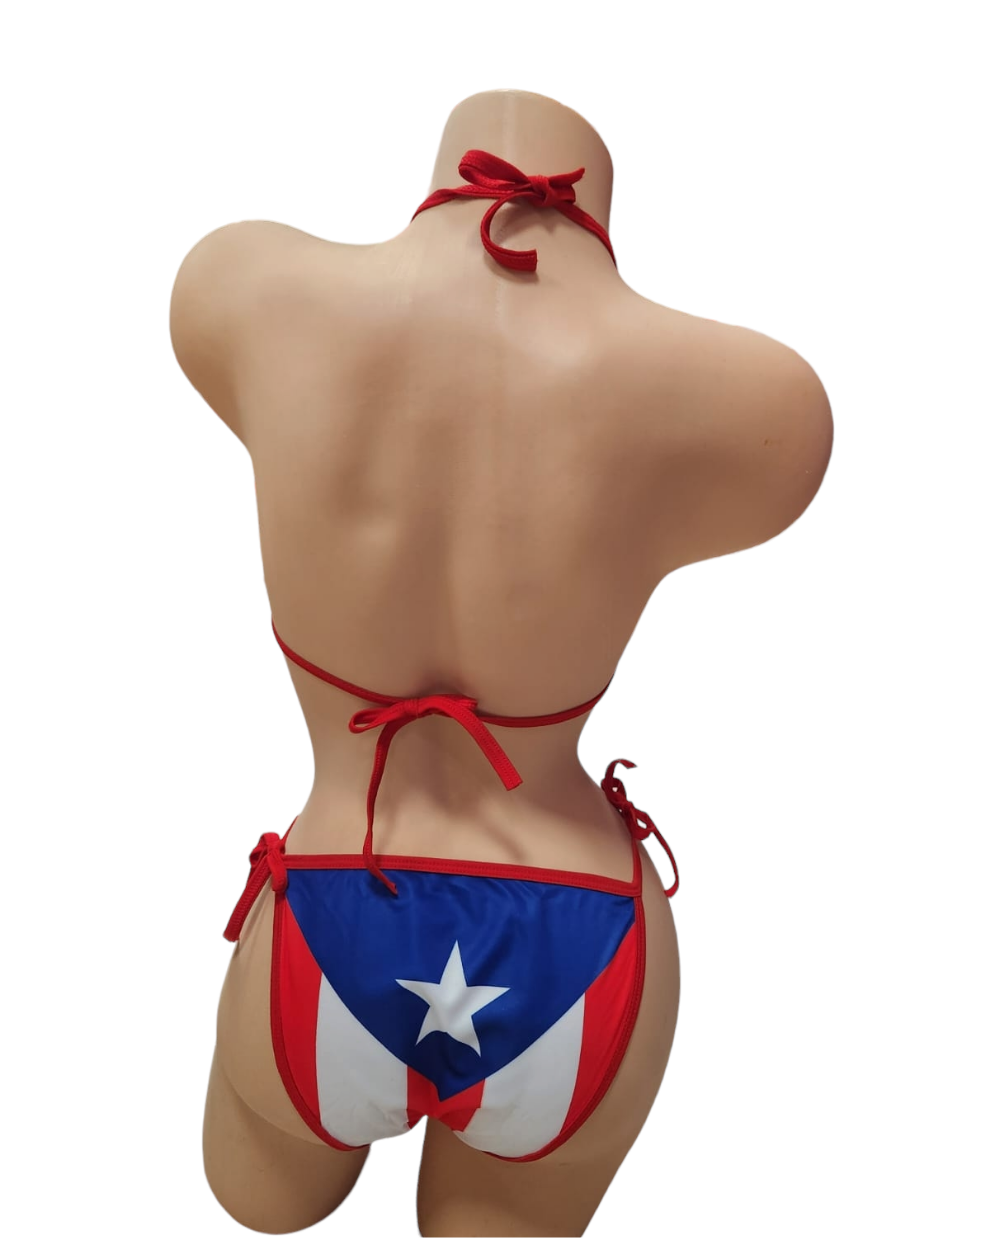 Puerto Rican swimsuit